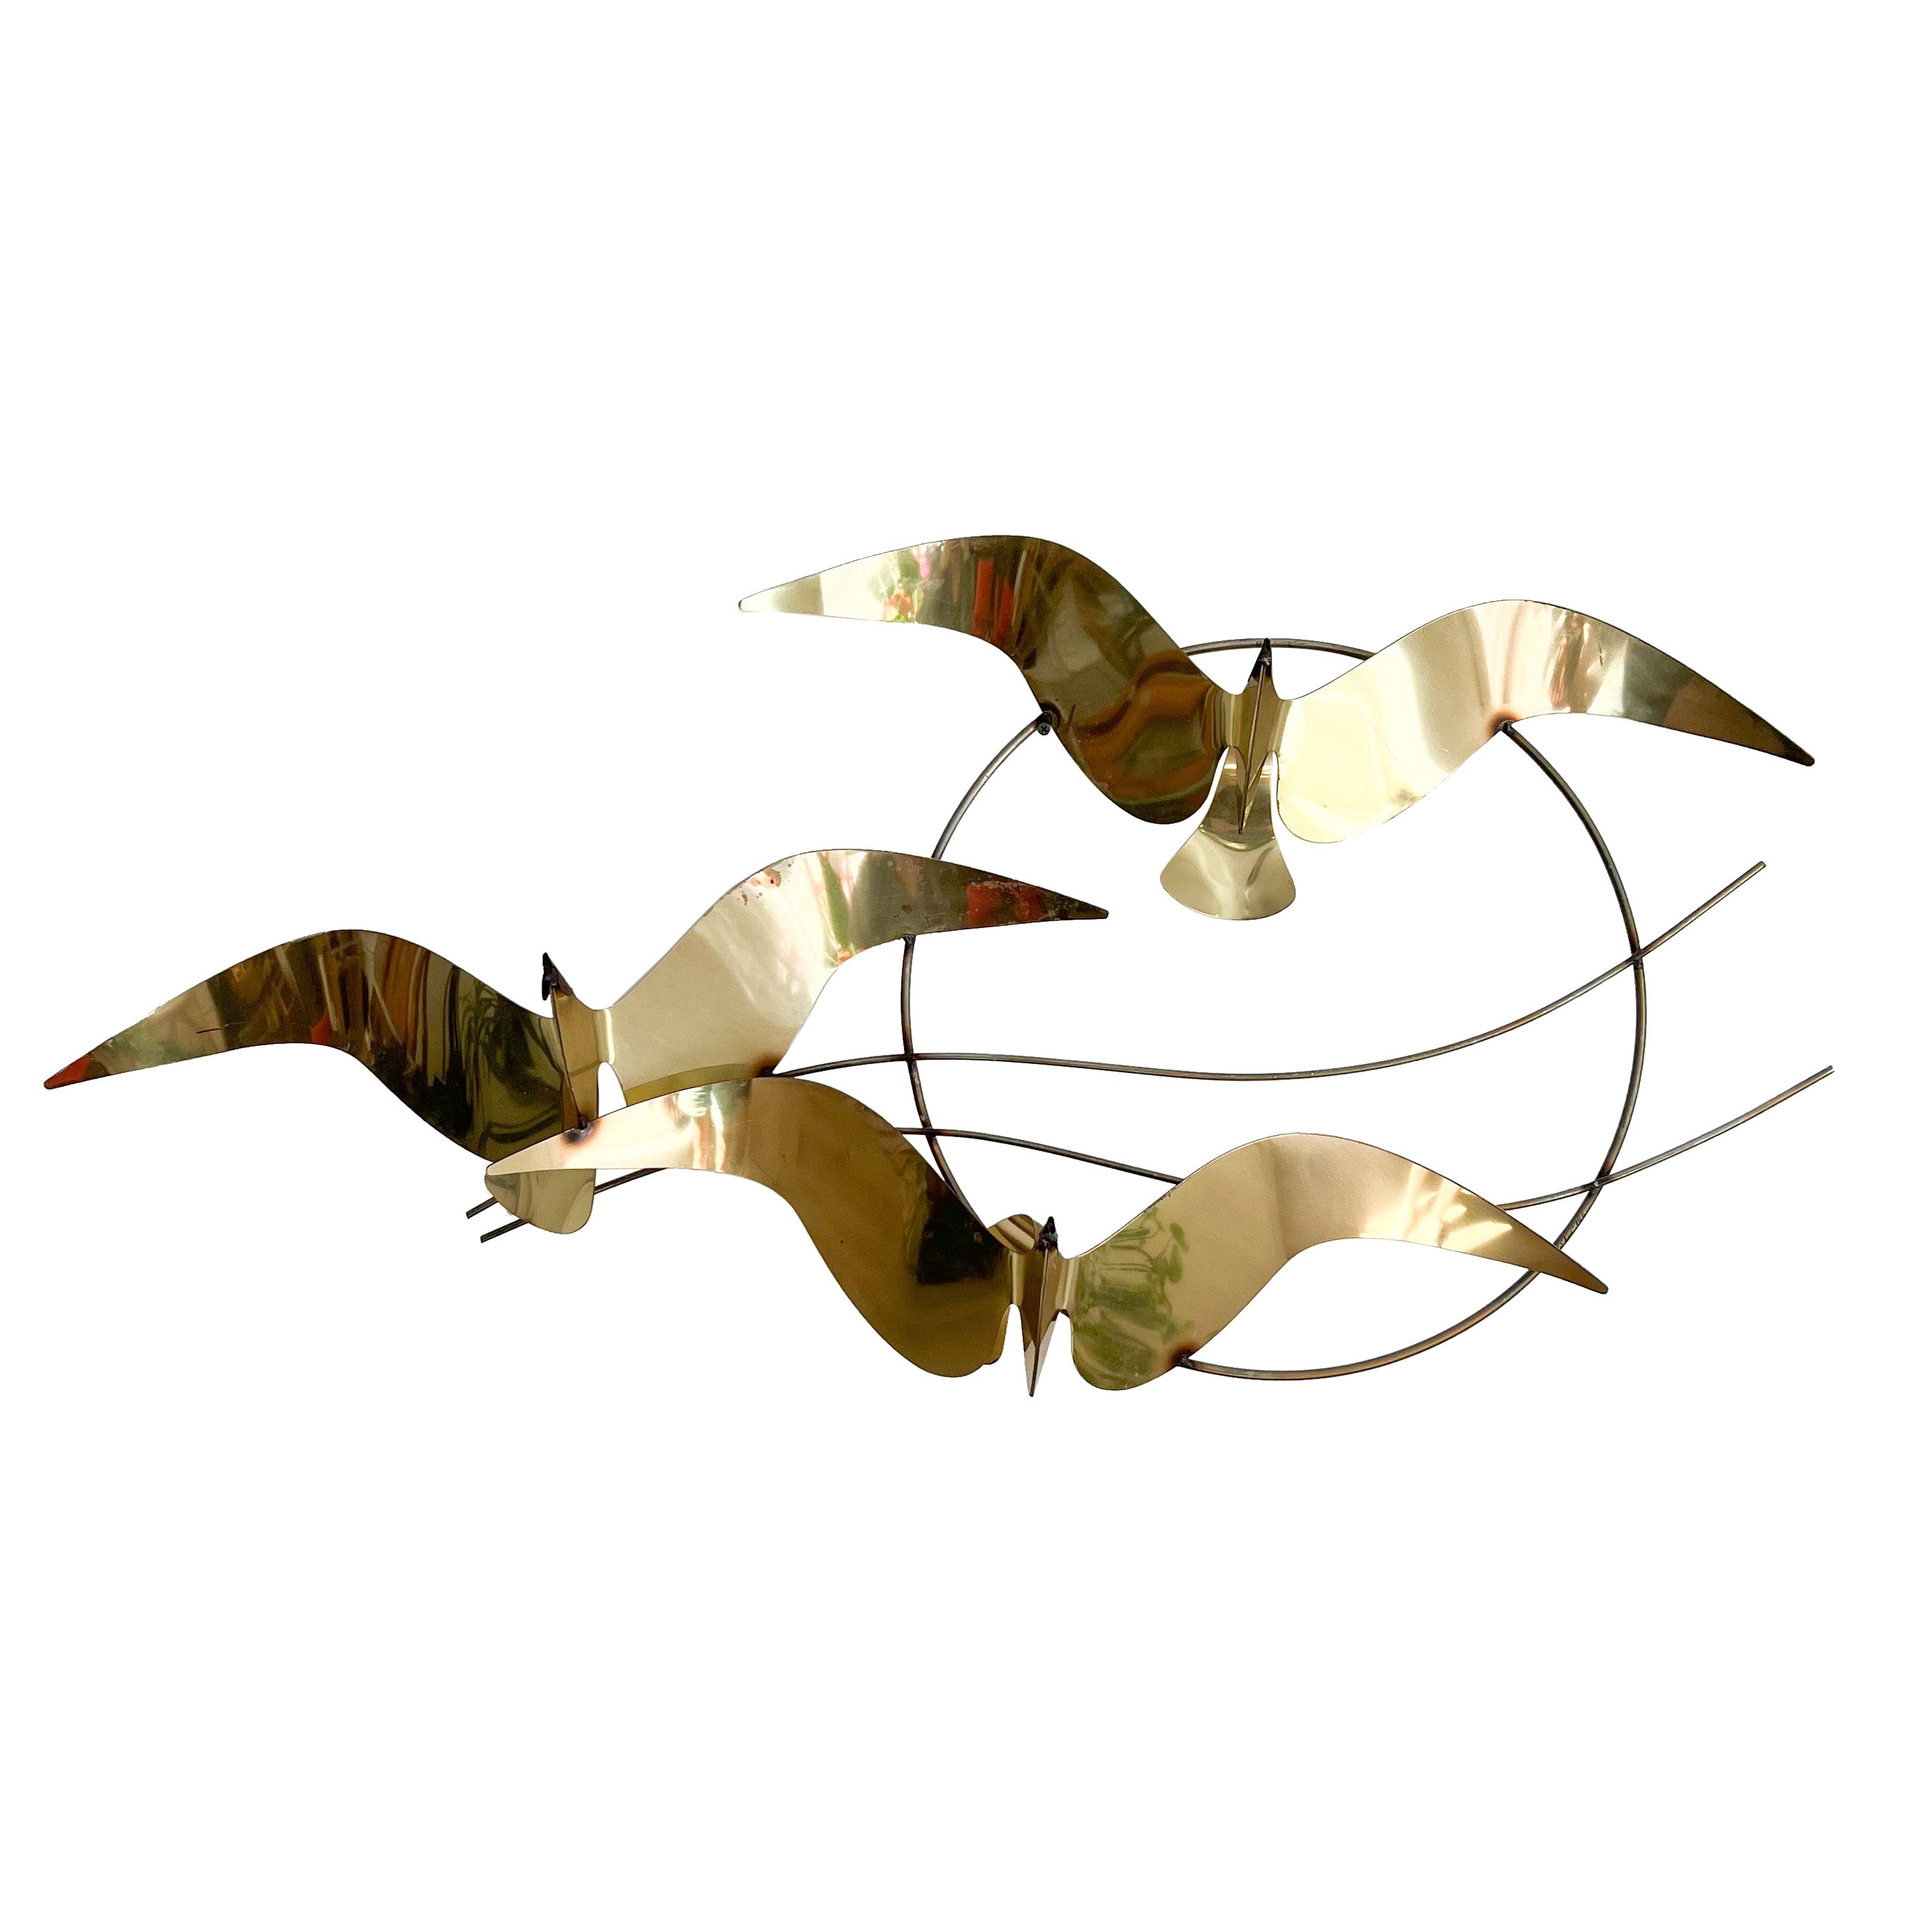 C. Jere Seagulls in Flight Metal Art